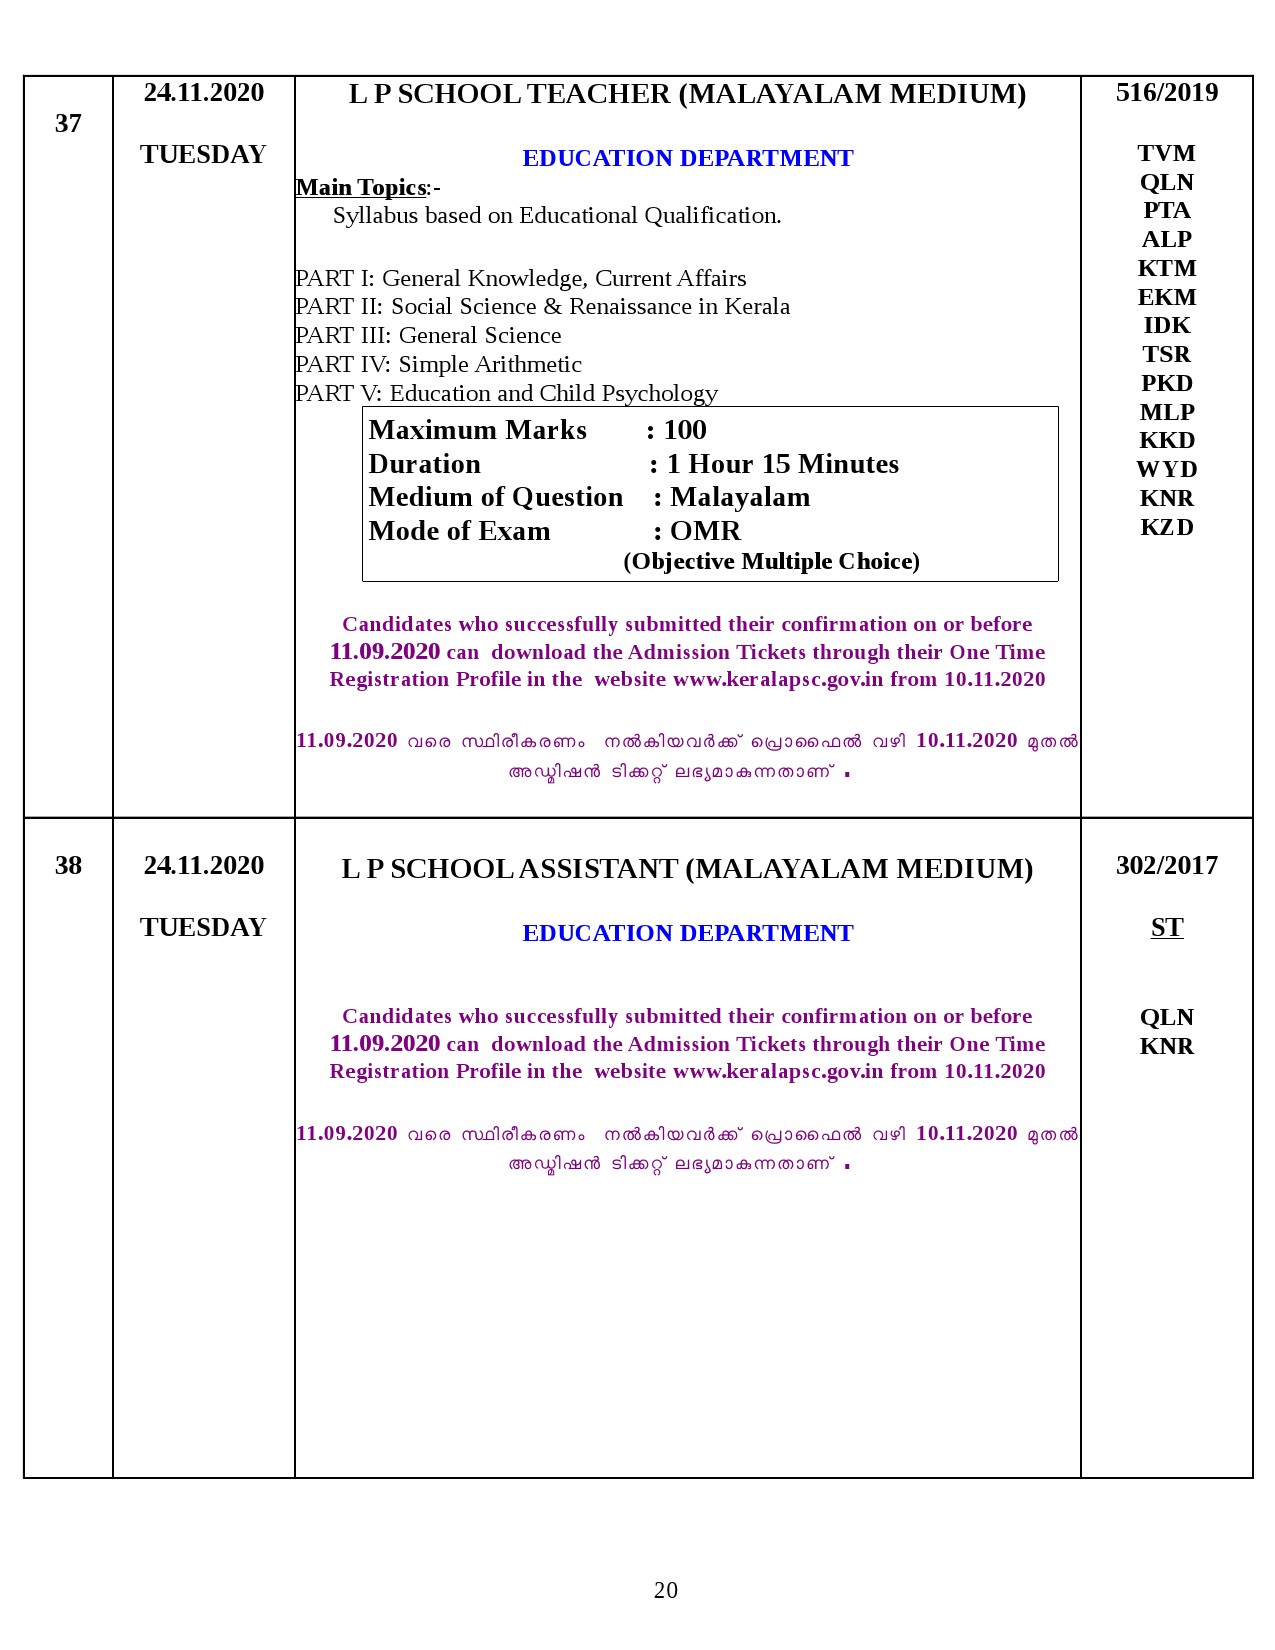 Kerala PSC Final Exam Schedule for November 2020 - Notification Image 20